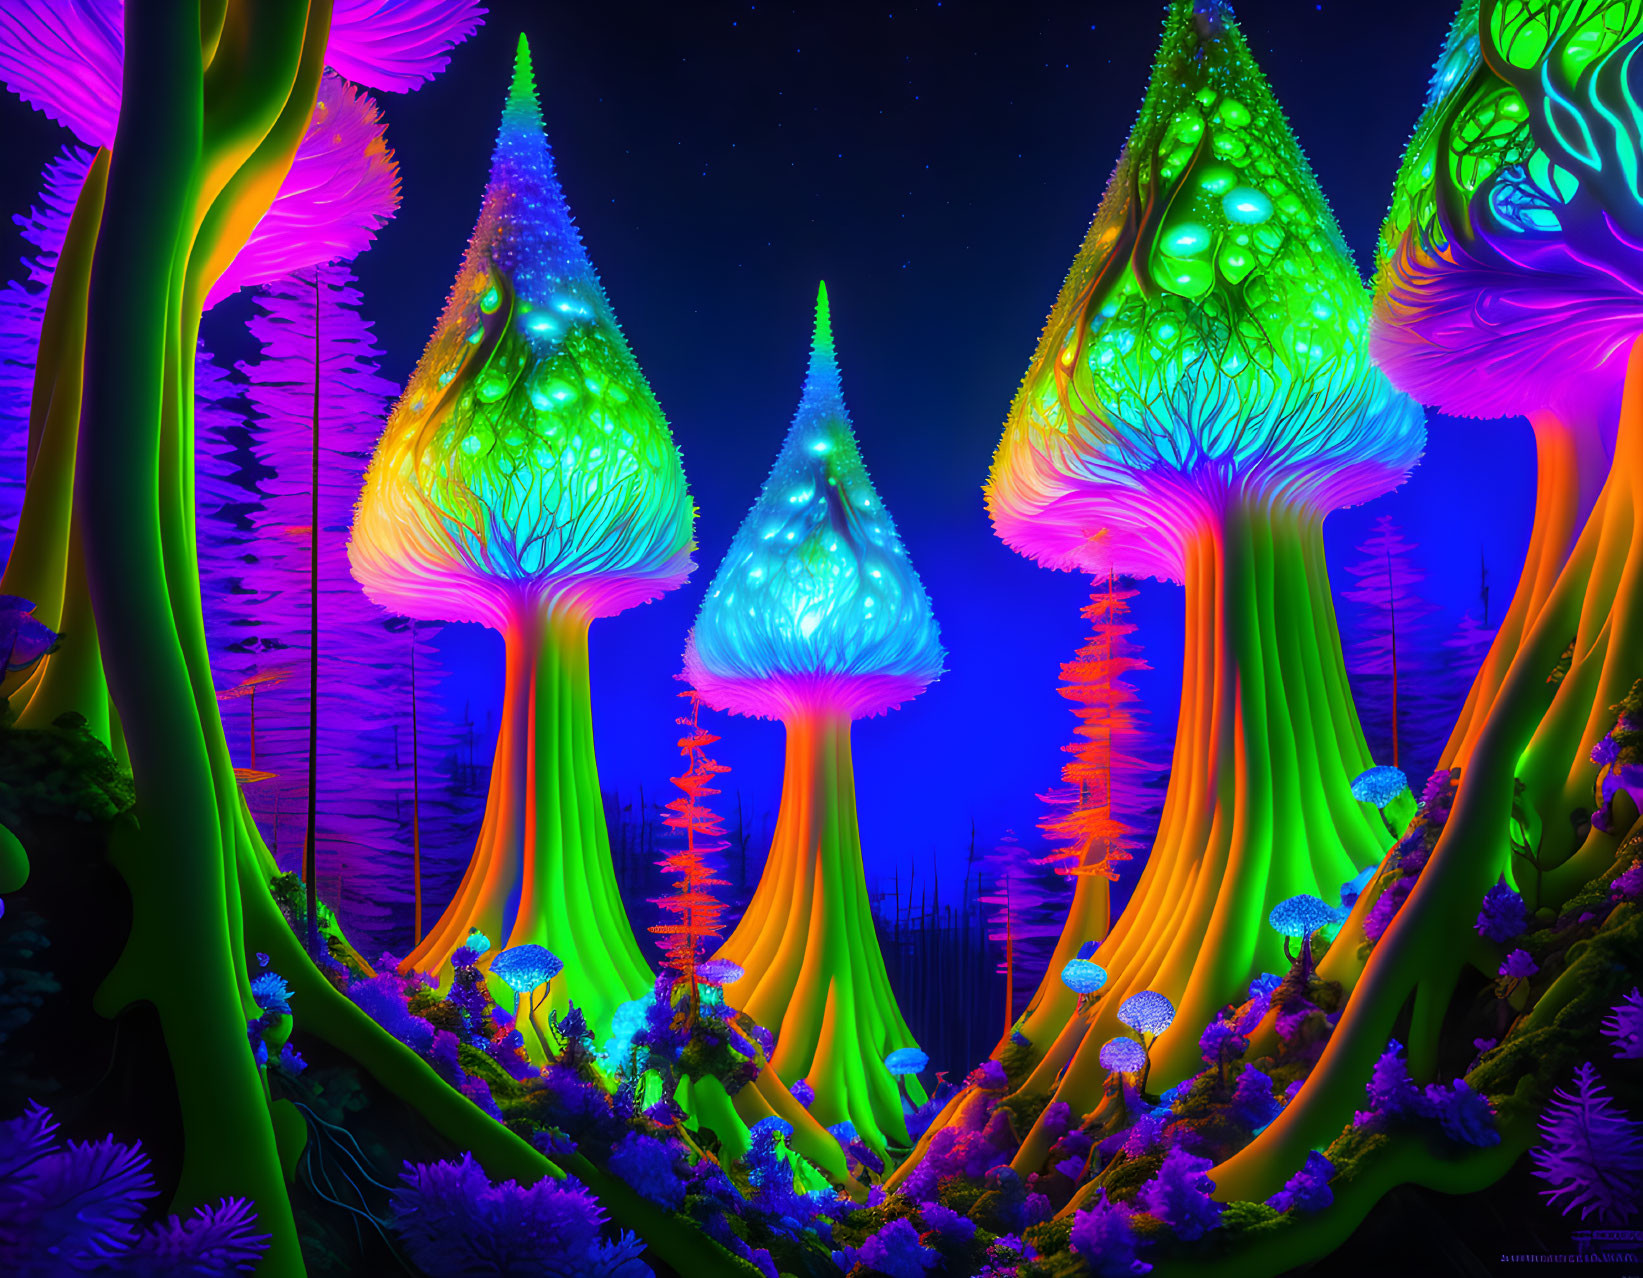 Neon-hued fantastical trees in a starry night digital artwork